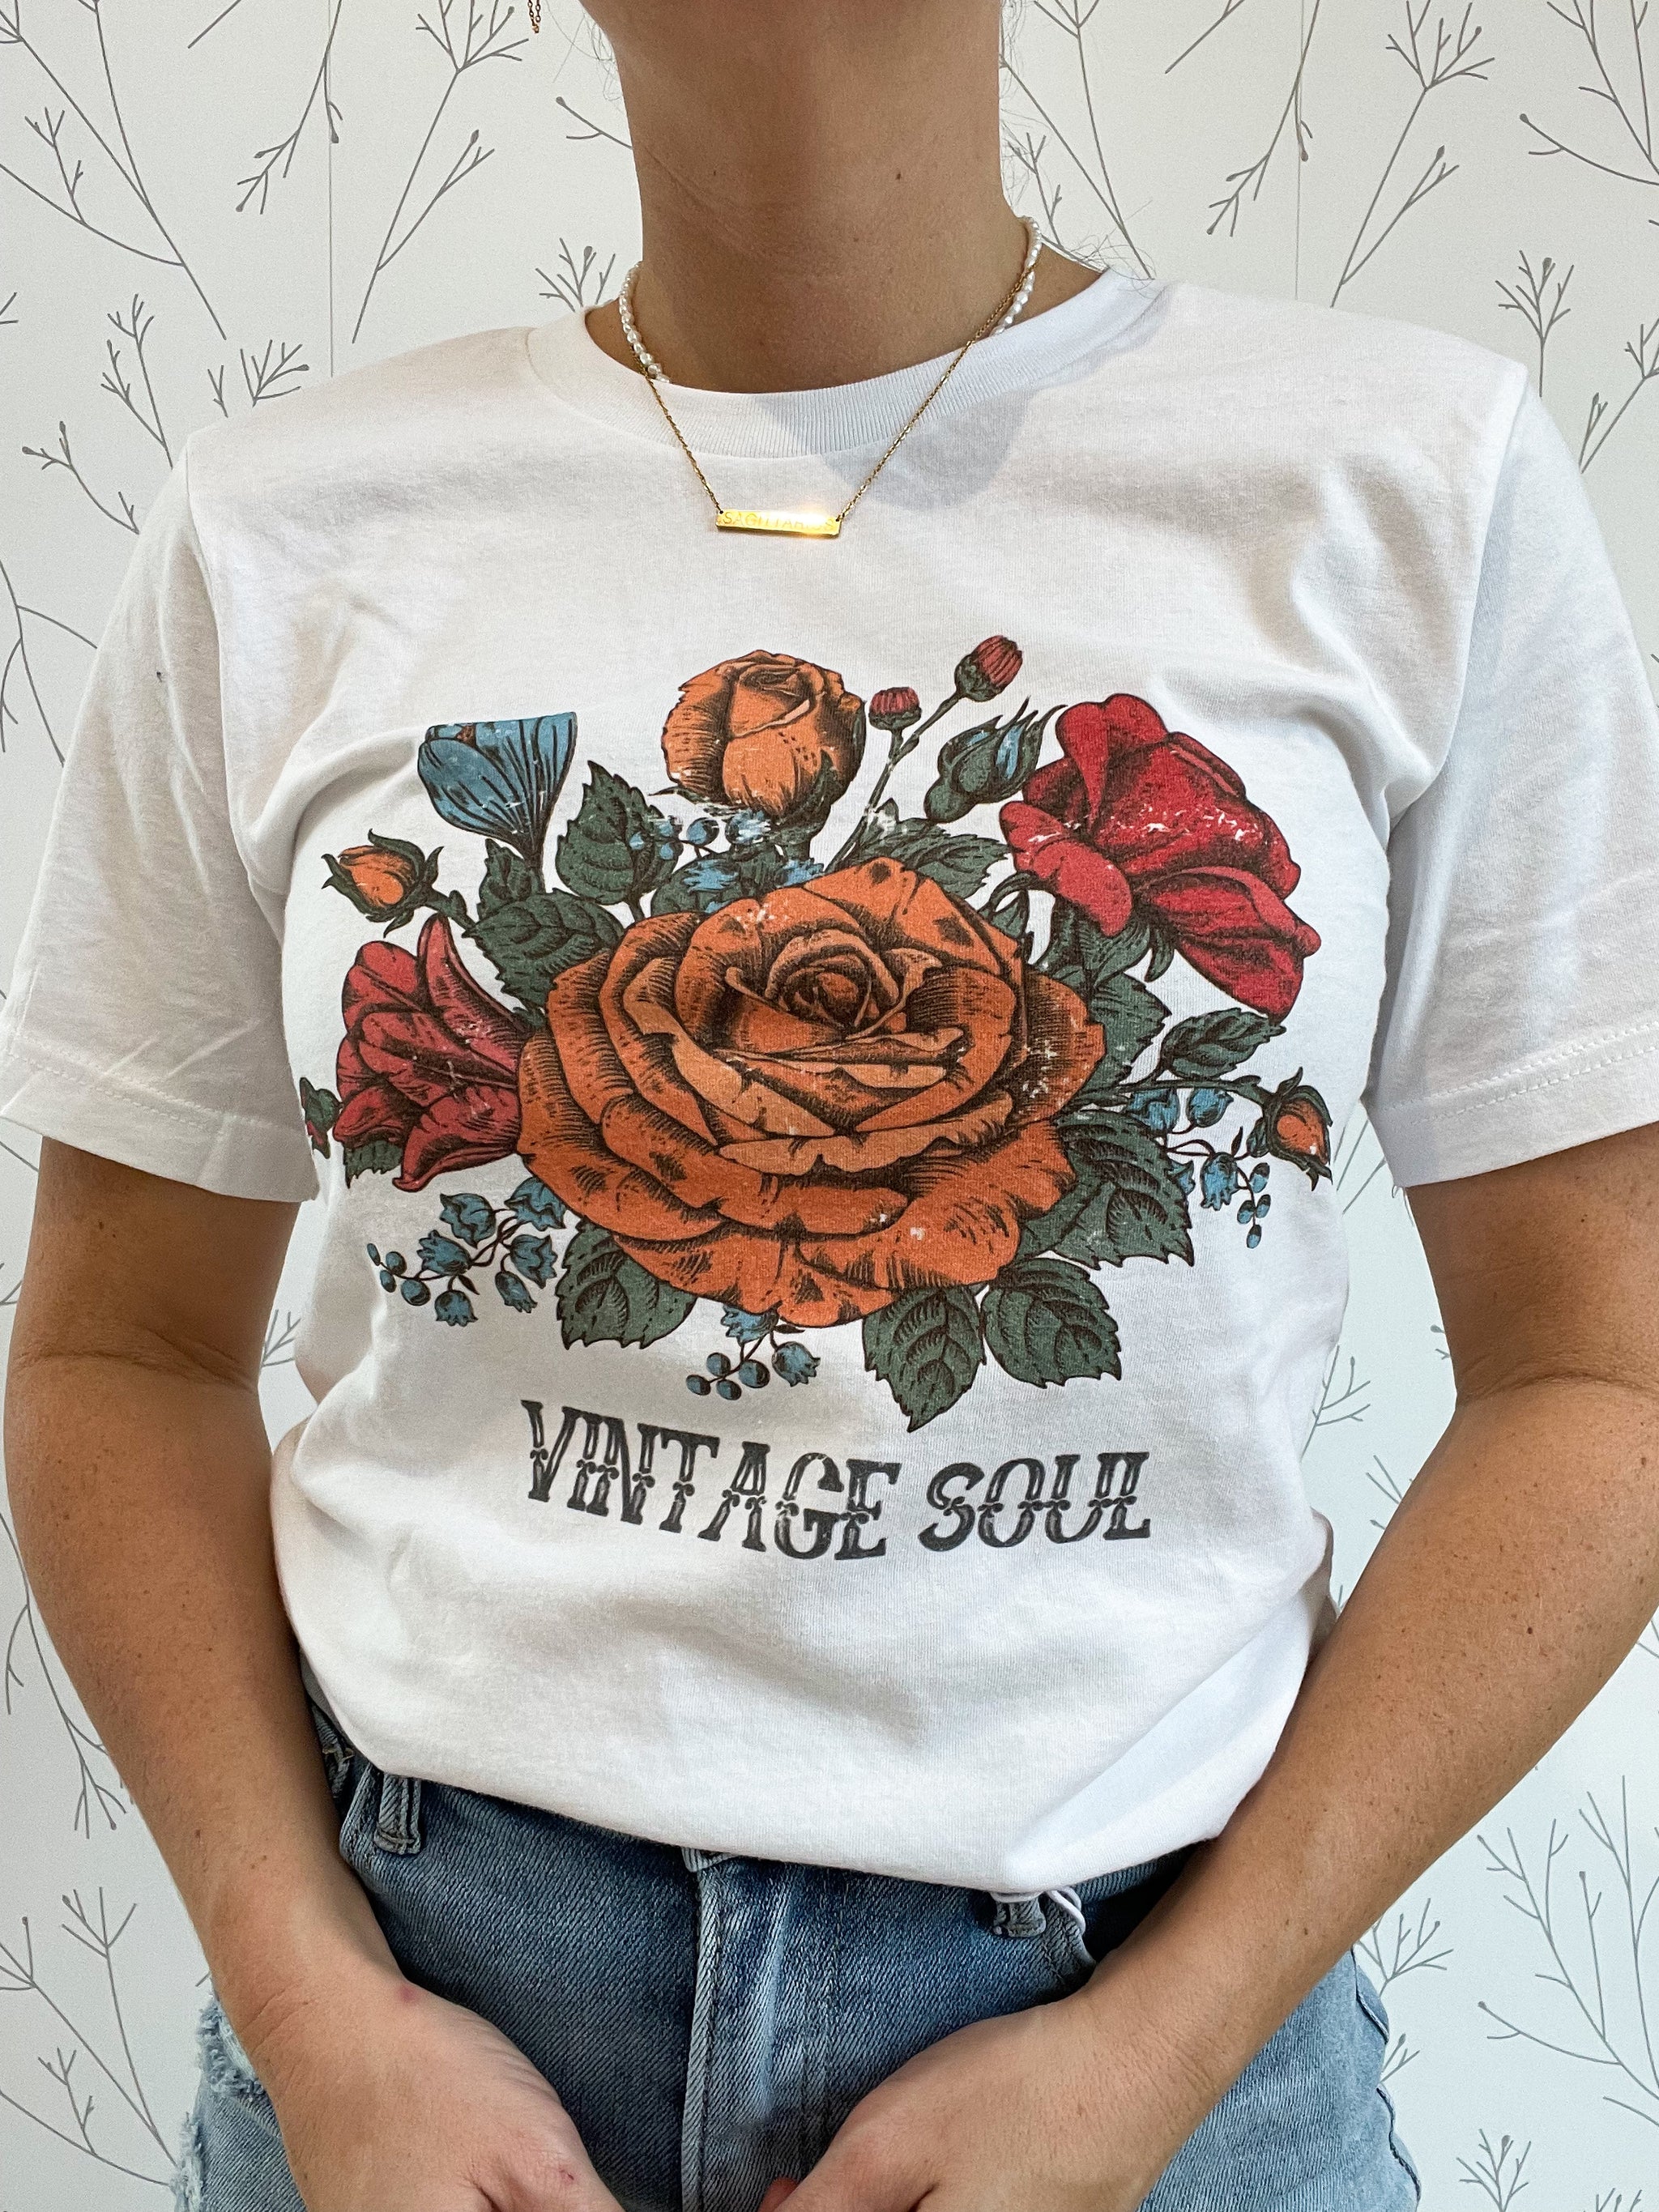 Vintage Soul Floral Graphic Tee